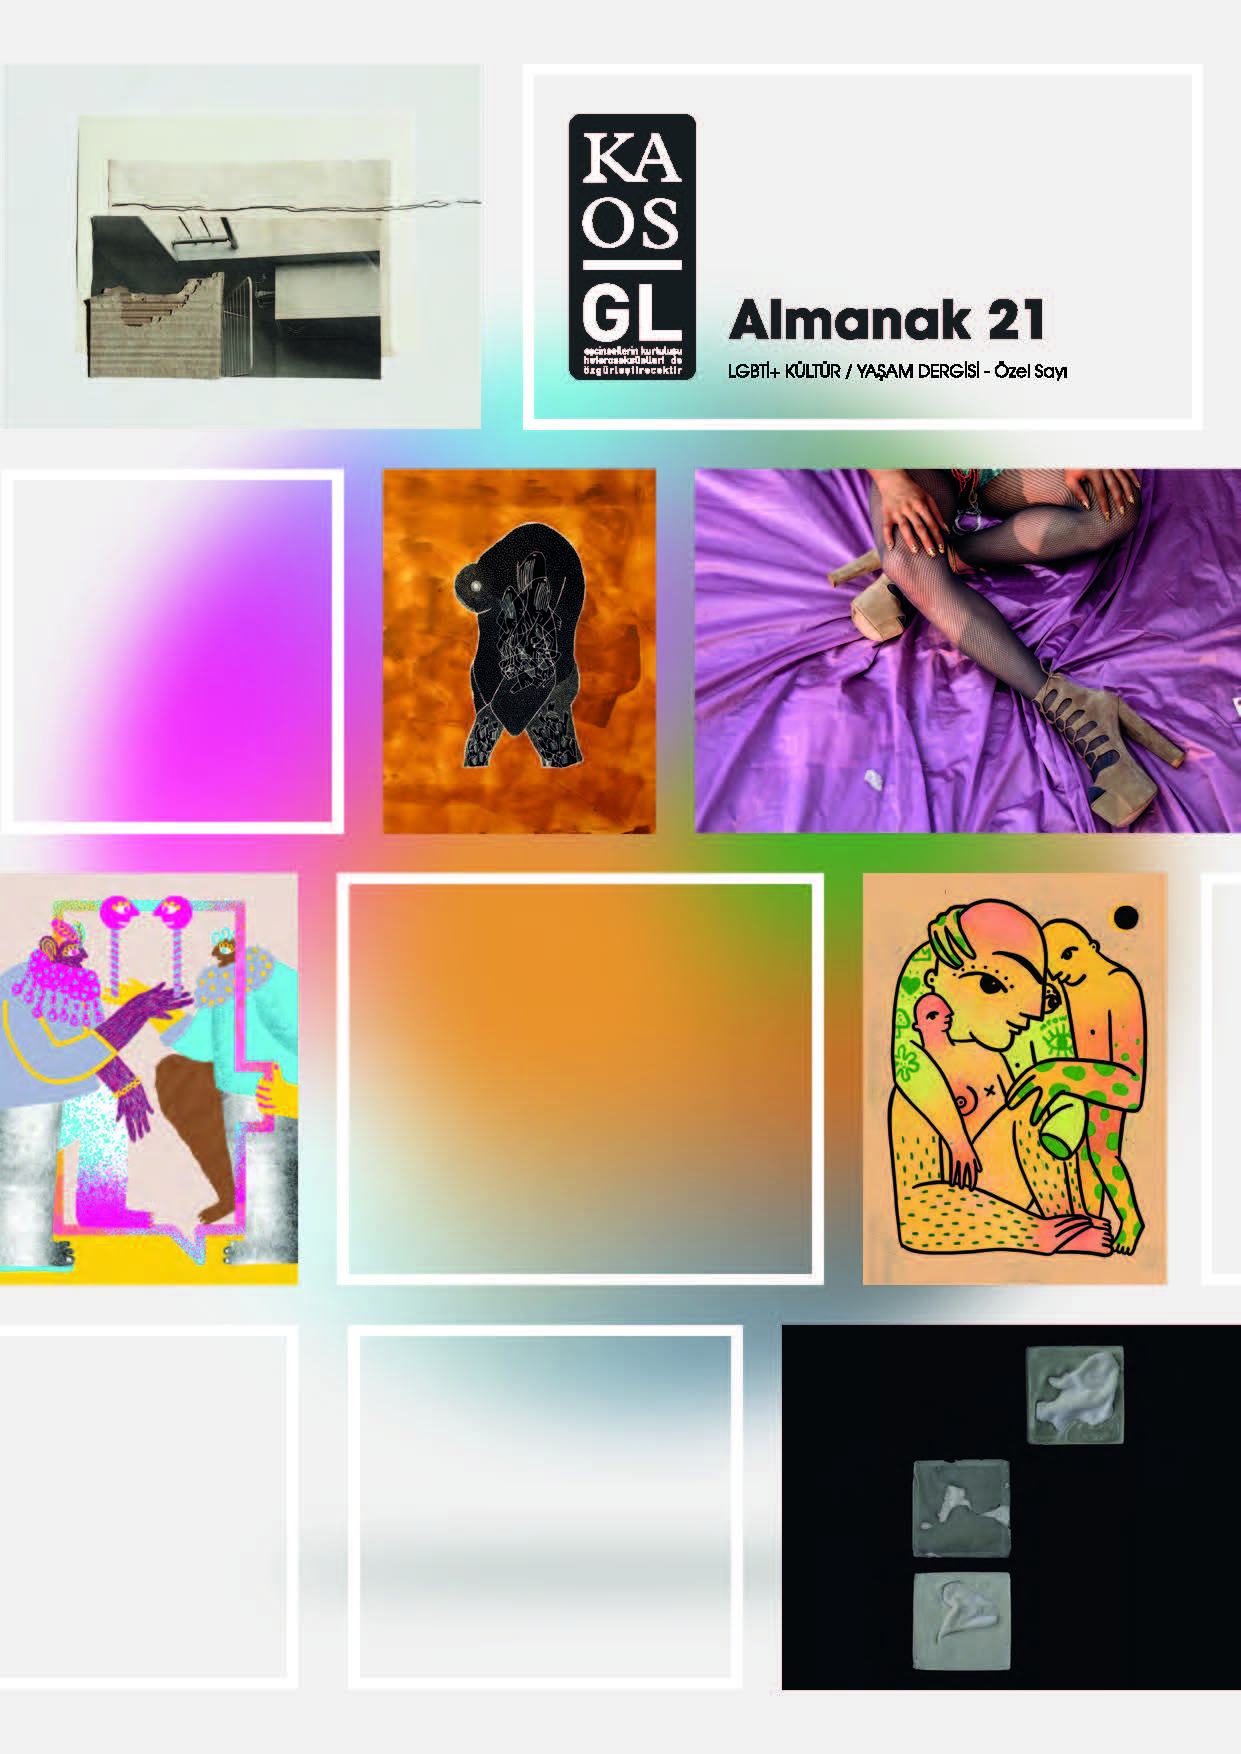 Almanak - 1 - Kaos GL Dergi